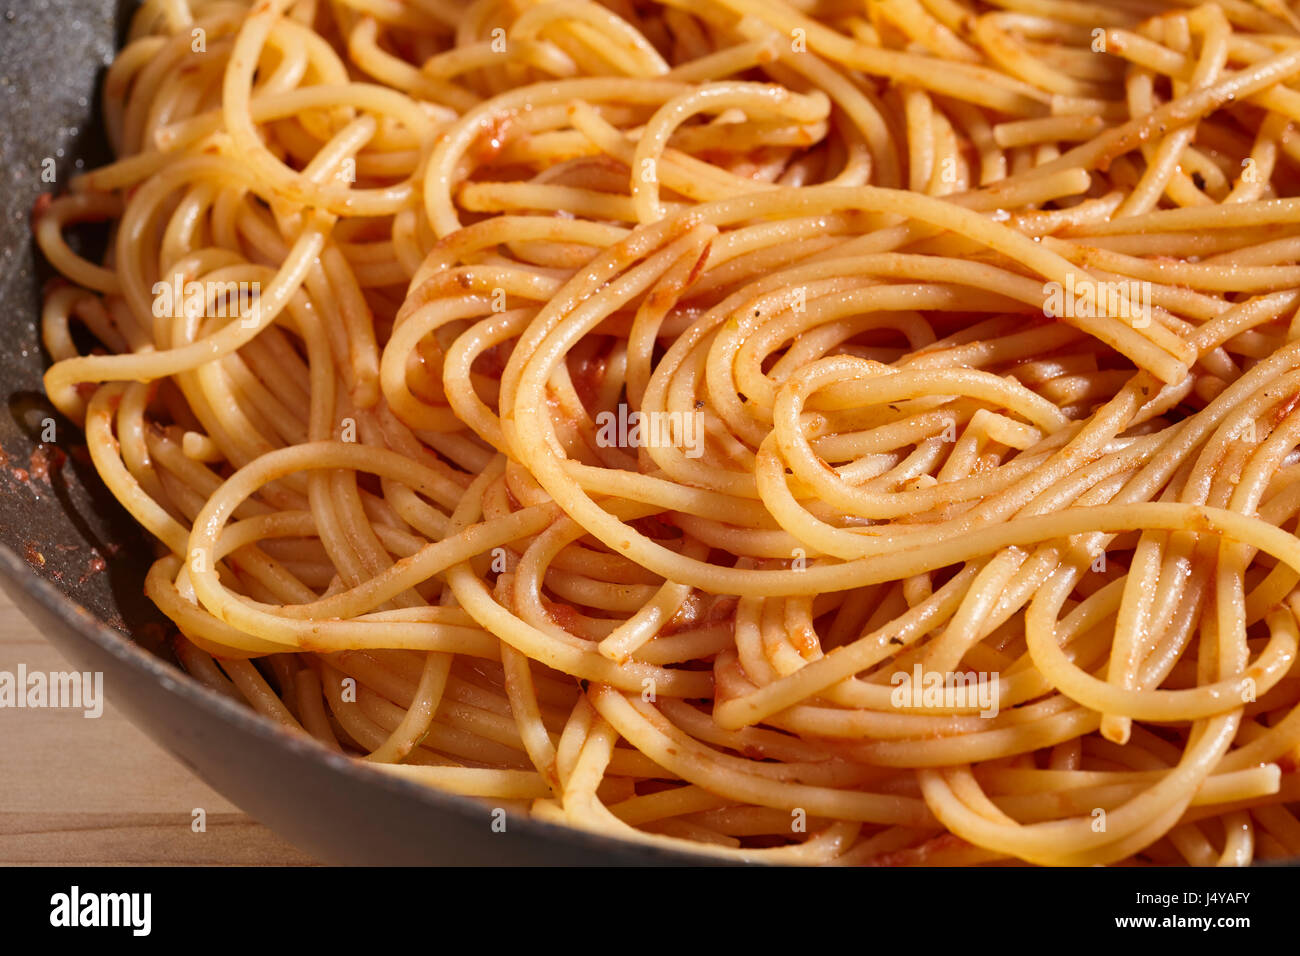 Spaghetti with tomato sauce, Italy's classic pasta dish Stock Photo